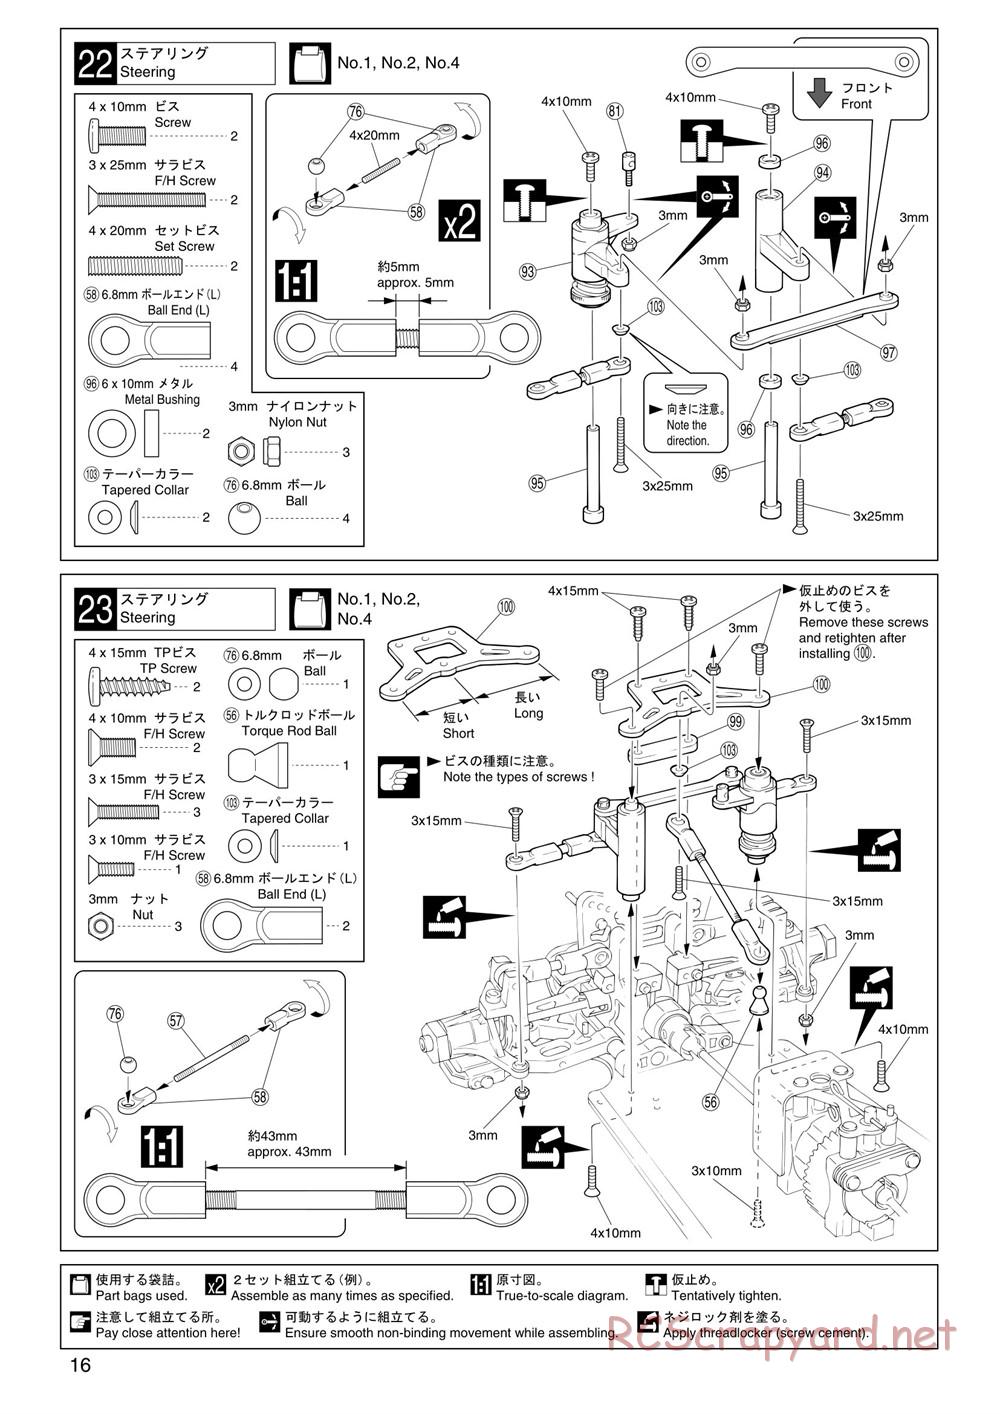 Kyosho - Super Eight GP20 Landmax 2 - Manual - Page 16